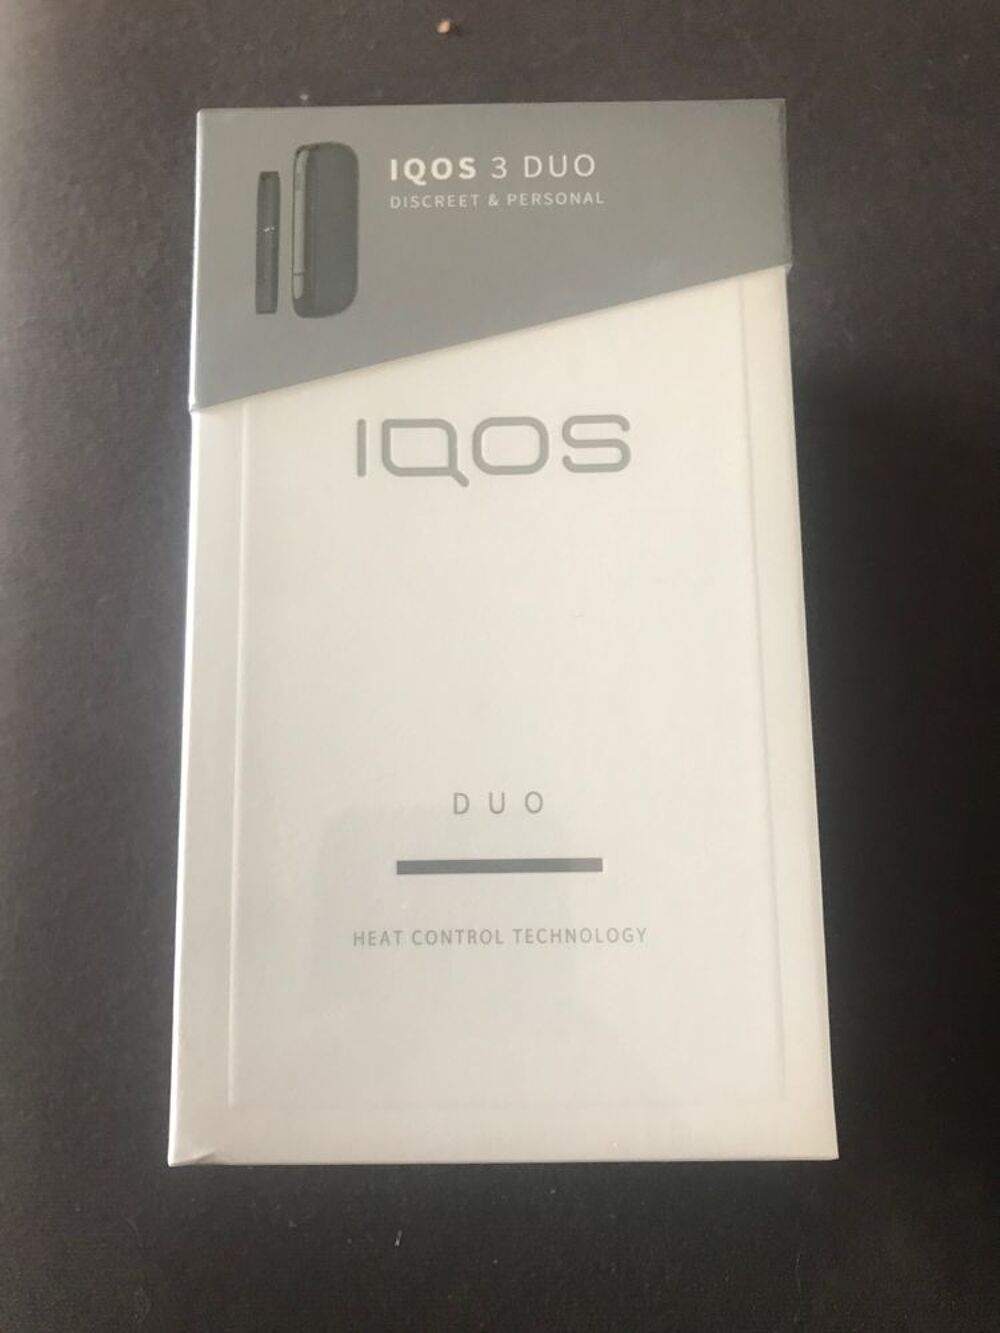 Kit IQOS 3 DUO Gris
Matriel informatique